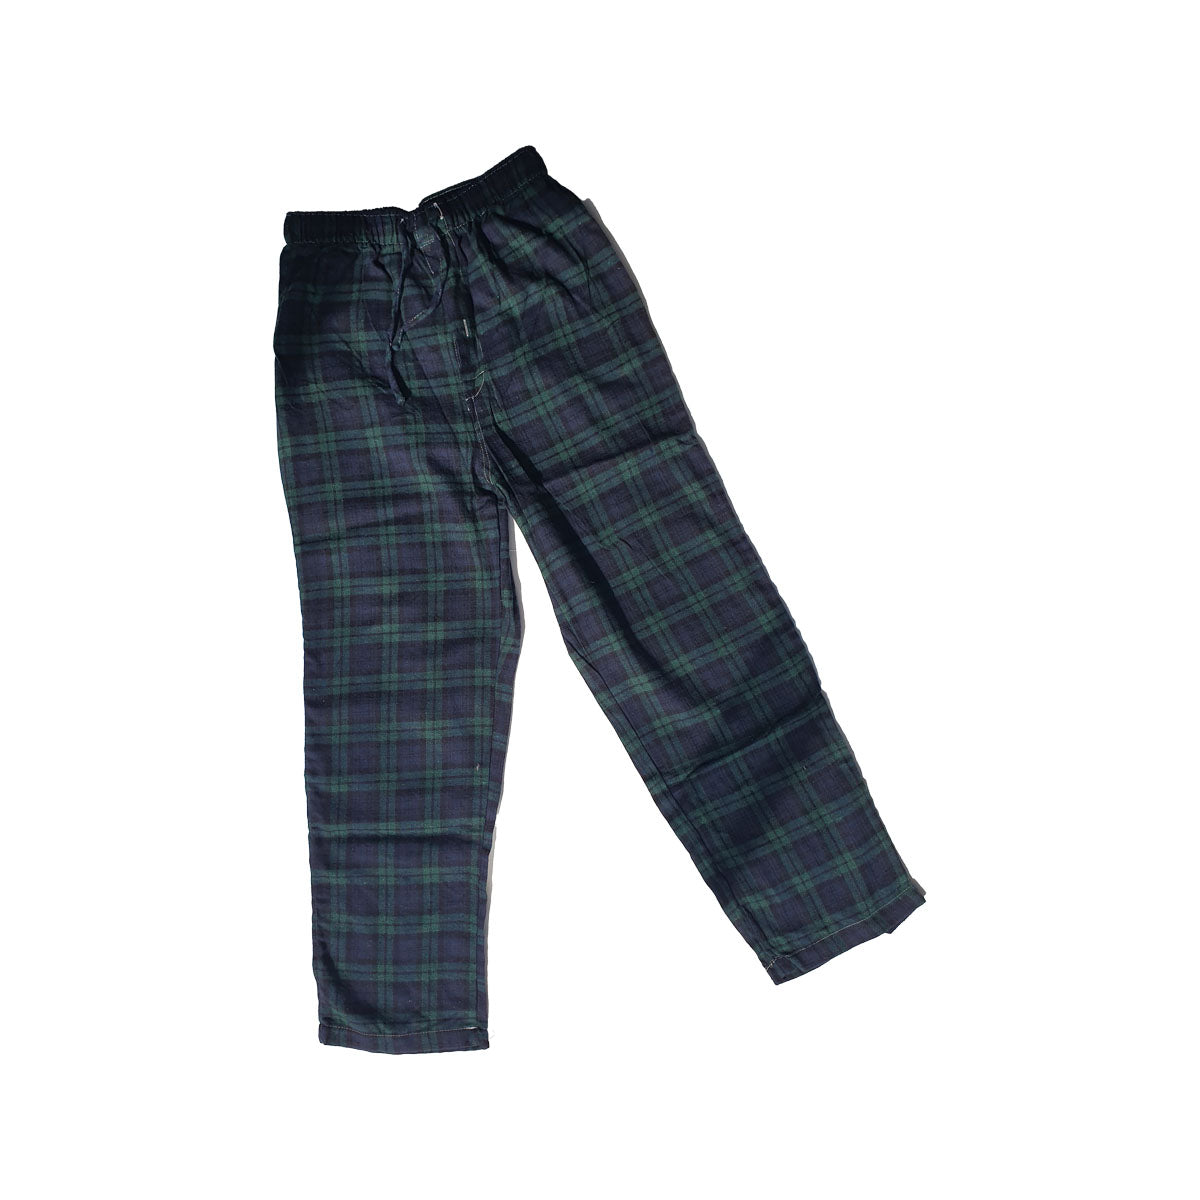 Flannel PJ's - Navy/Green